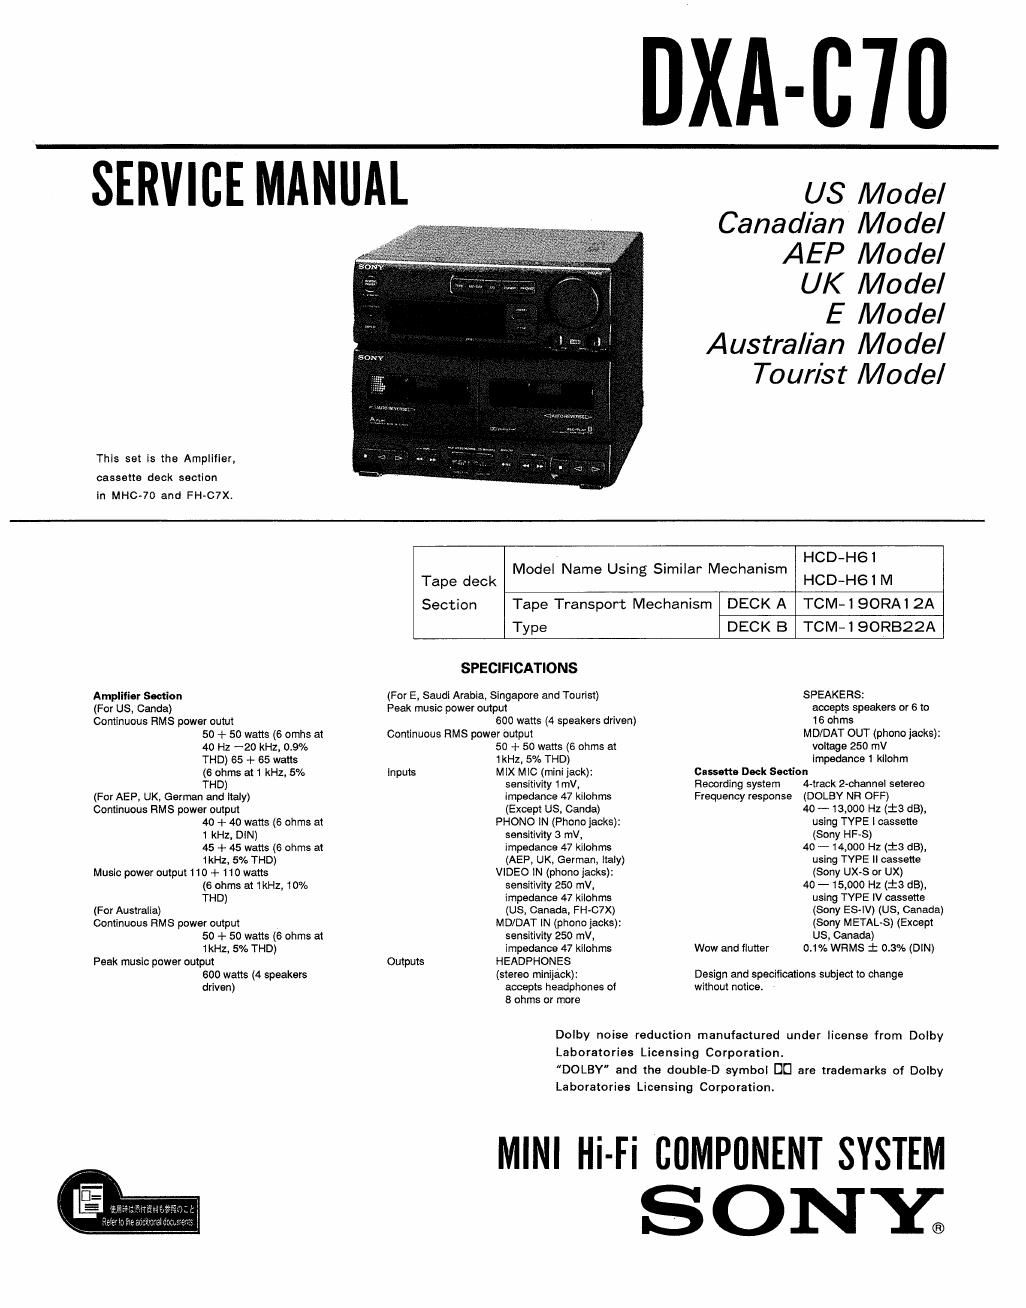 sony dxac 70 service manual